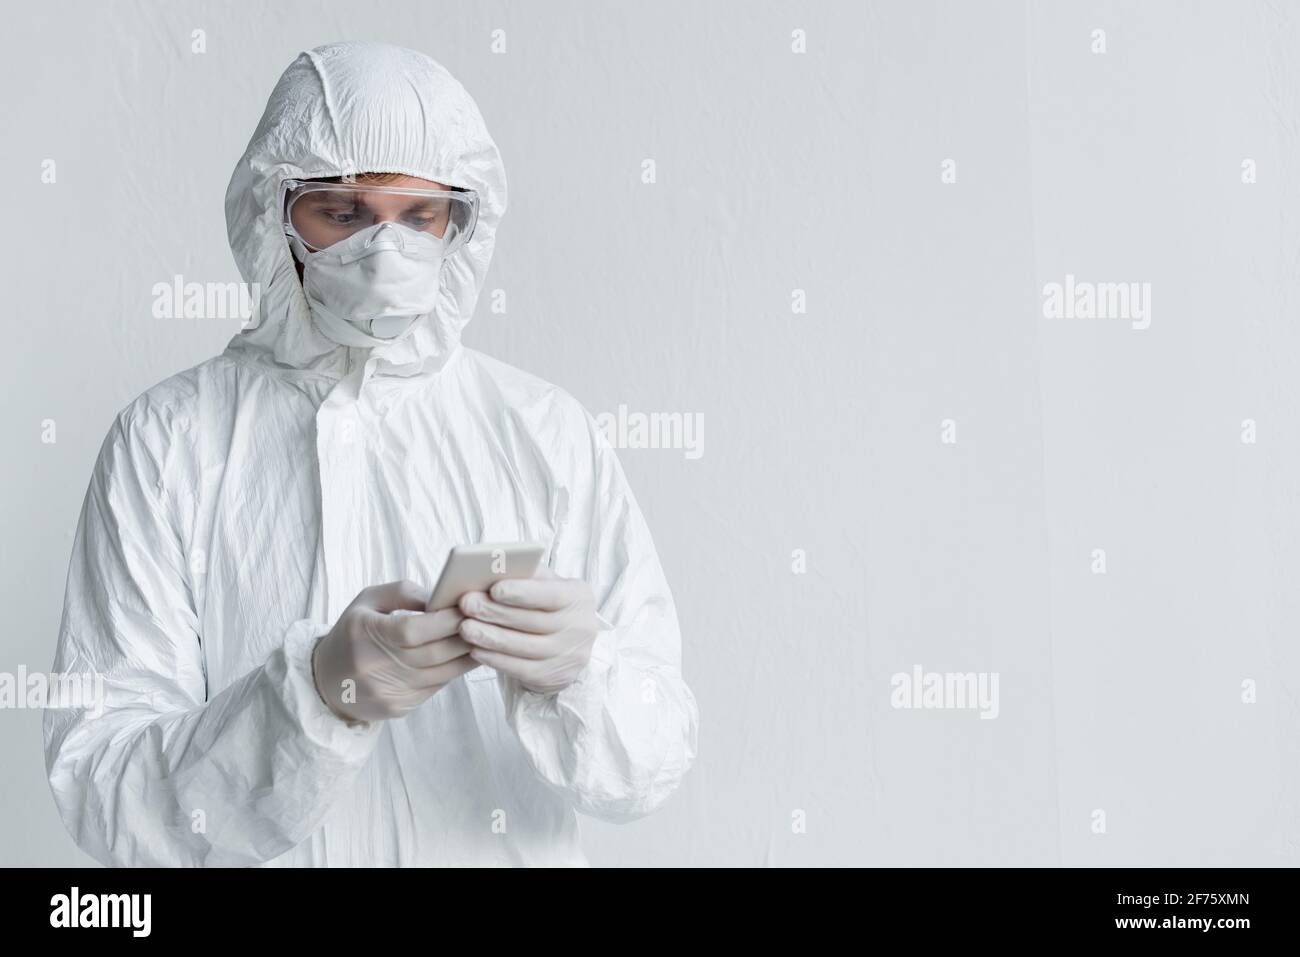 Scientist in hazmat suit using smartphone near wall Stock Photo